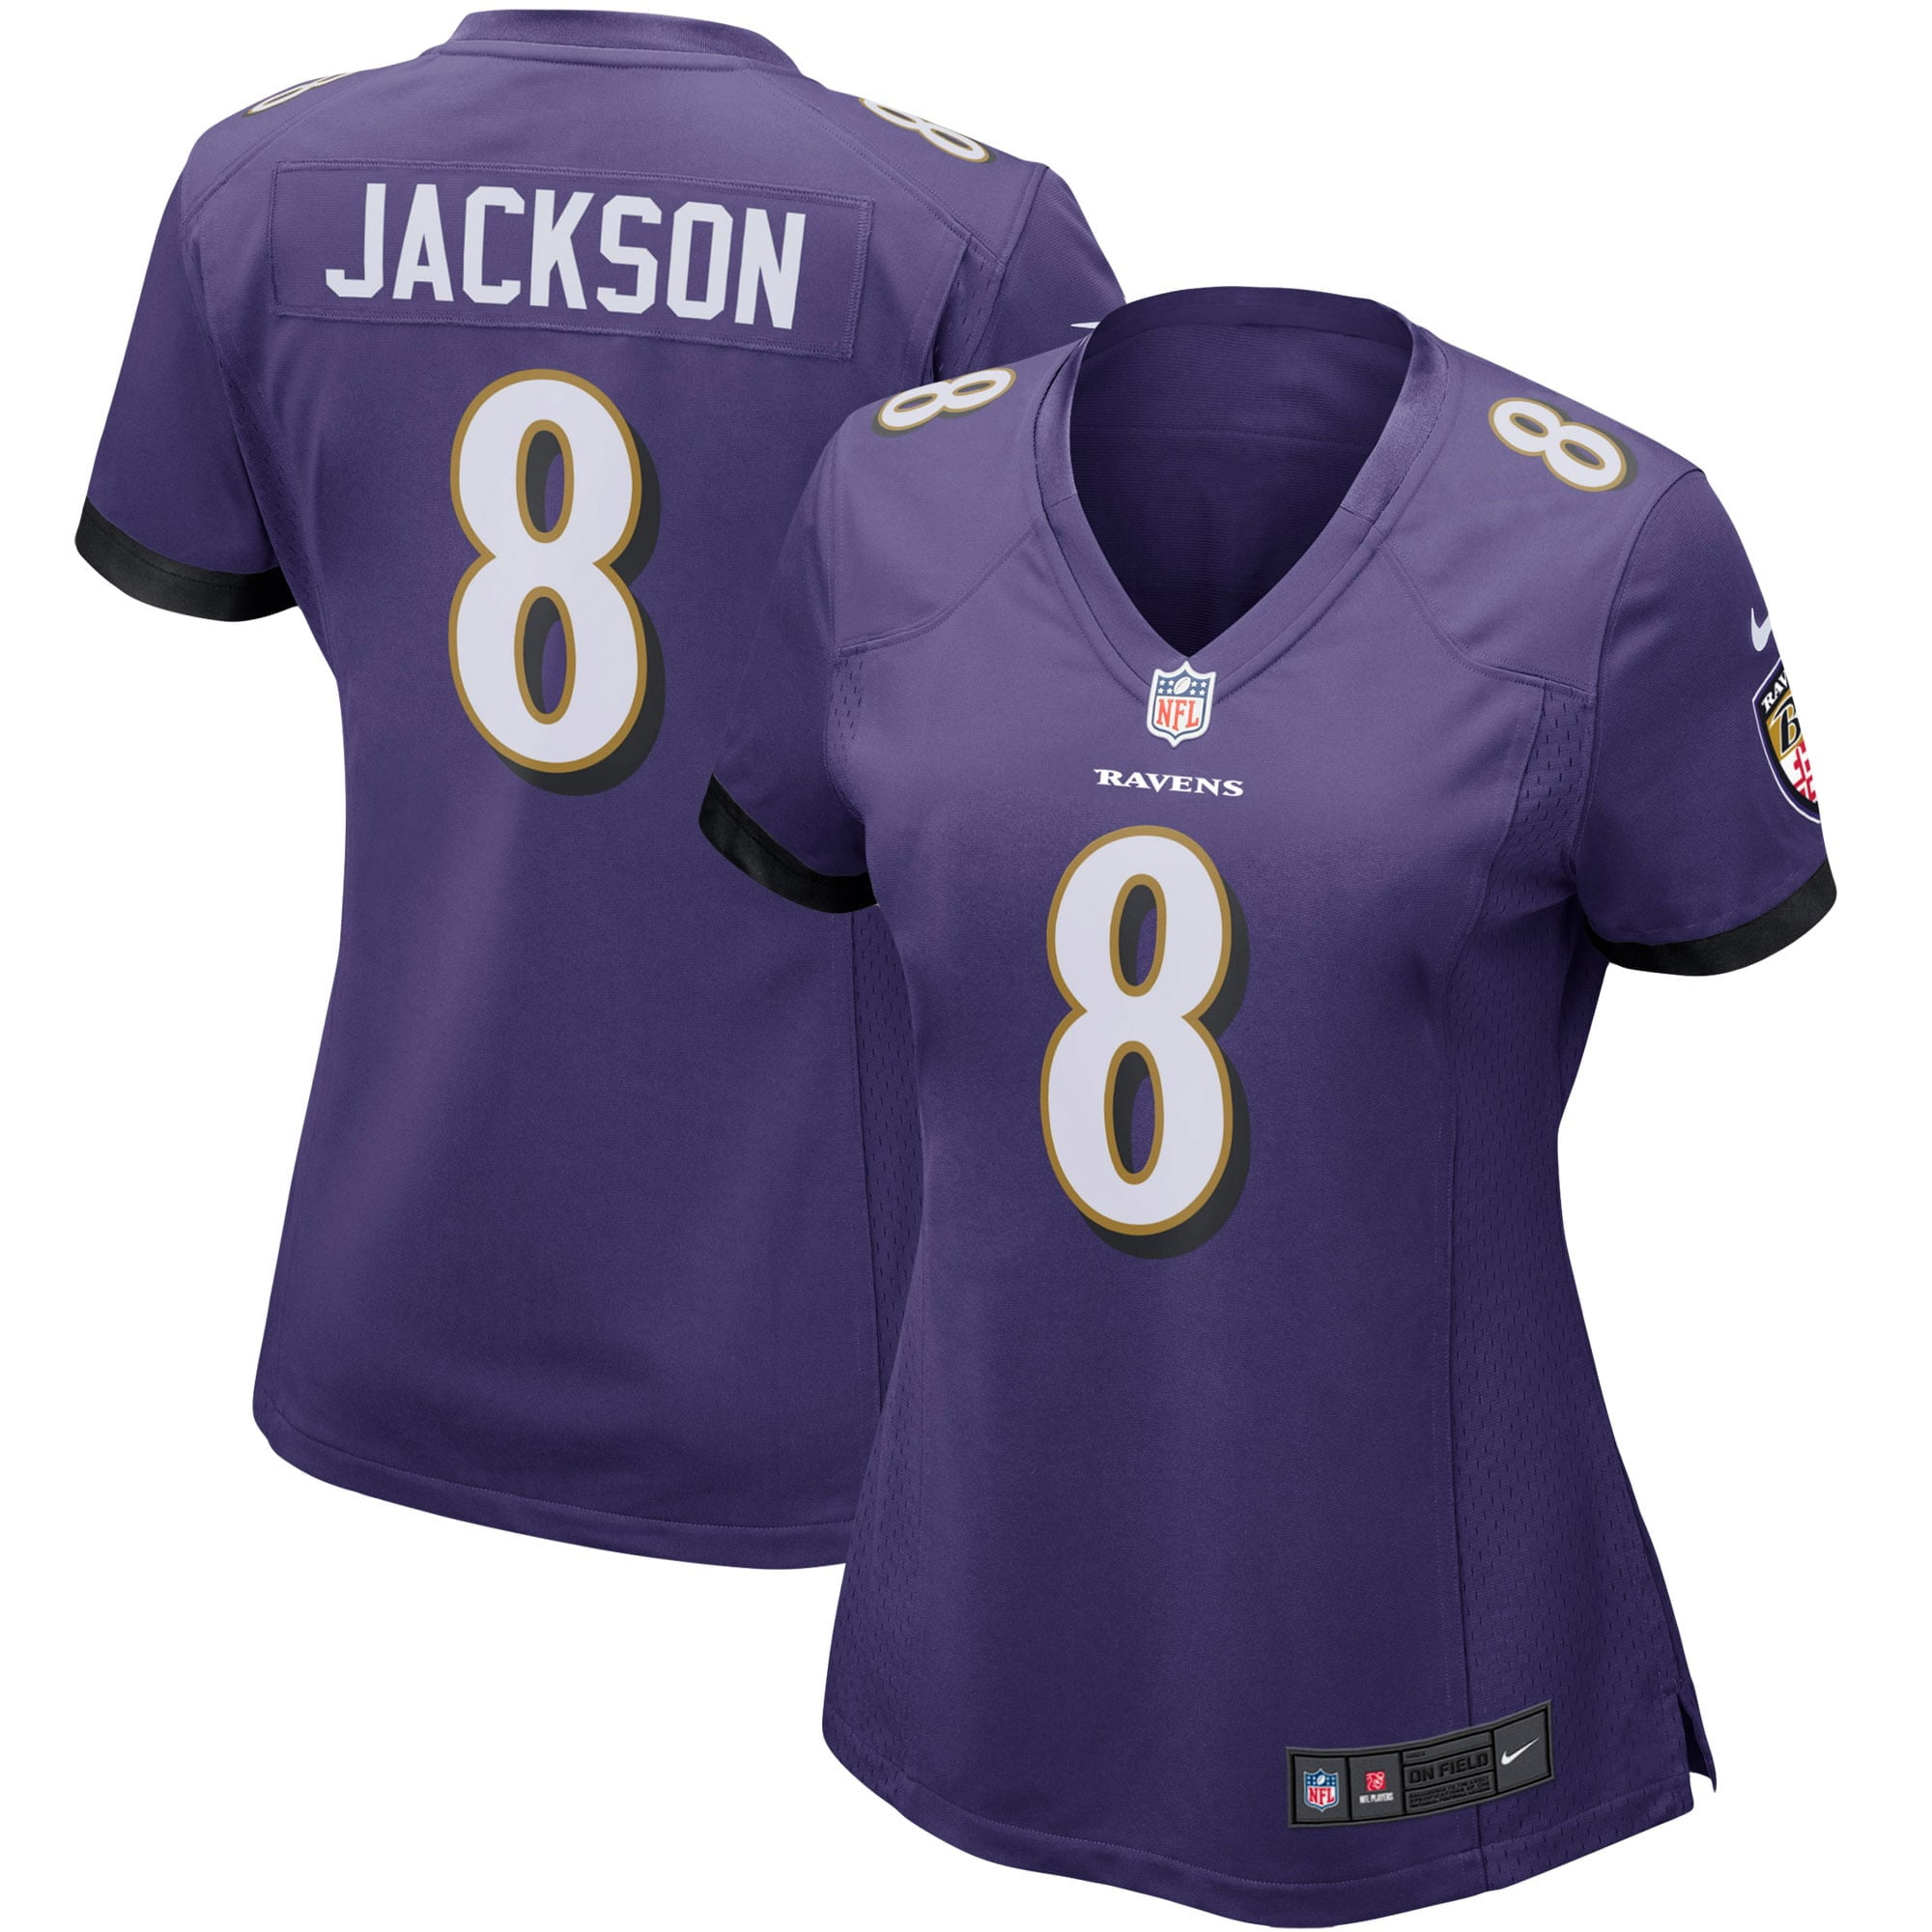 lamar jackson purple jersey